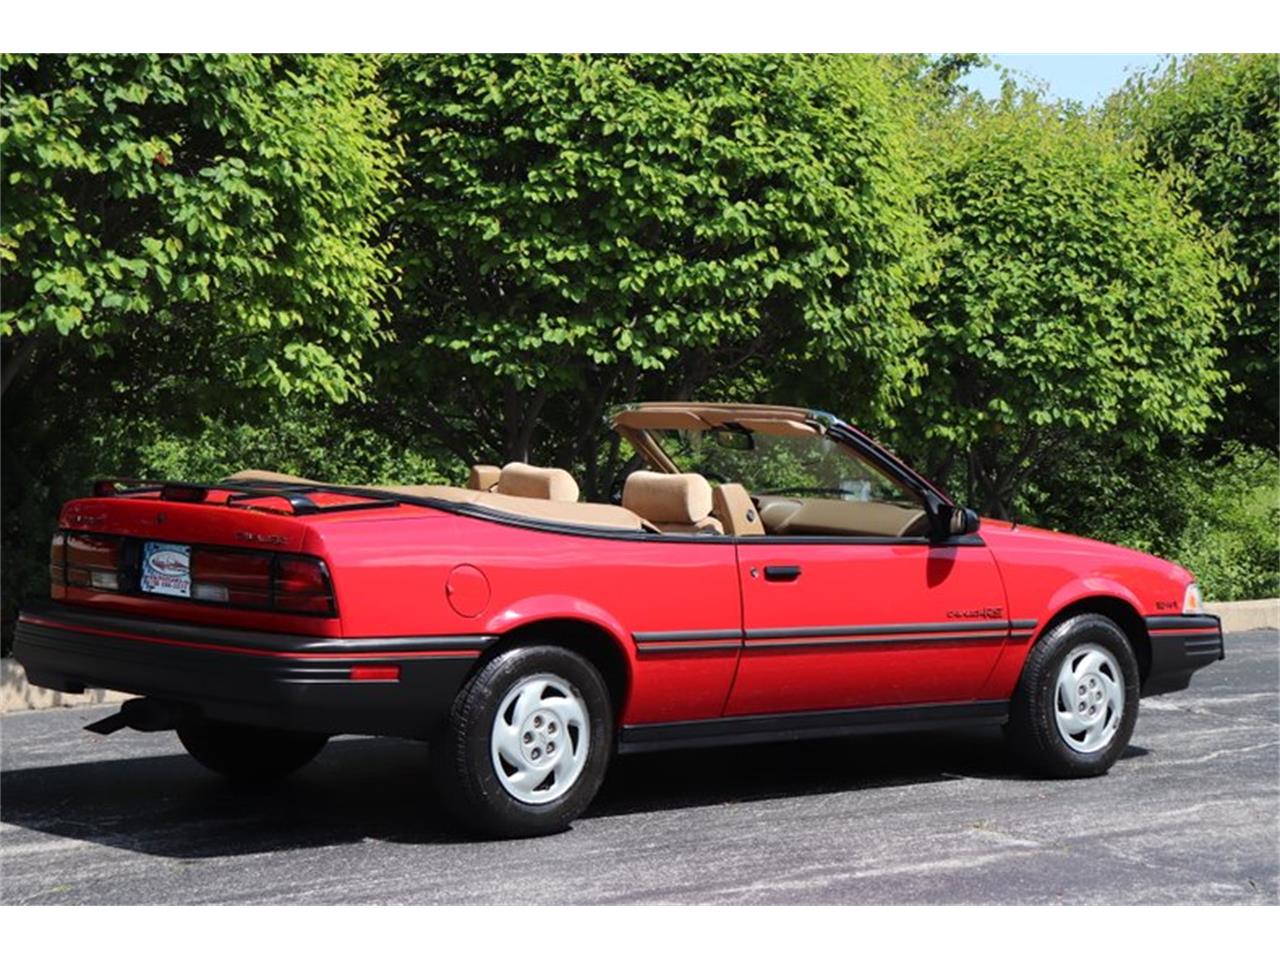 1991 Chevrolet Cavalier For Sale Classiccars Com Cc 1223008